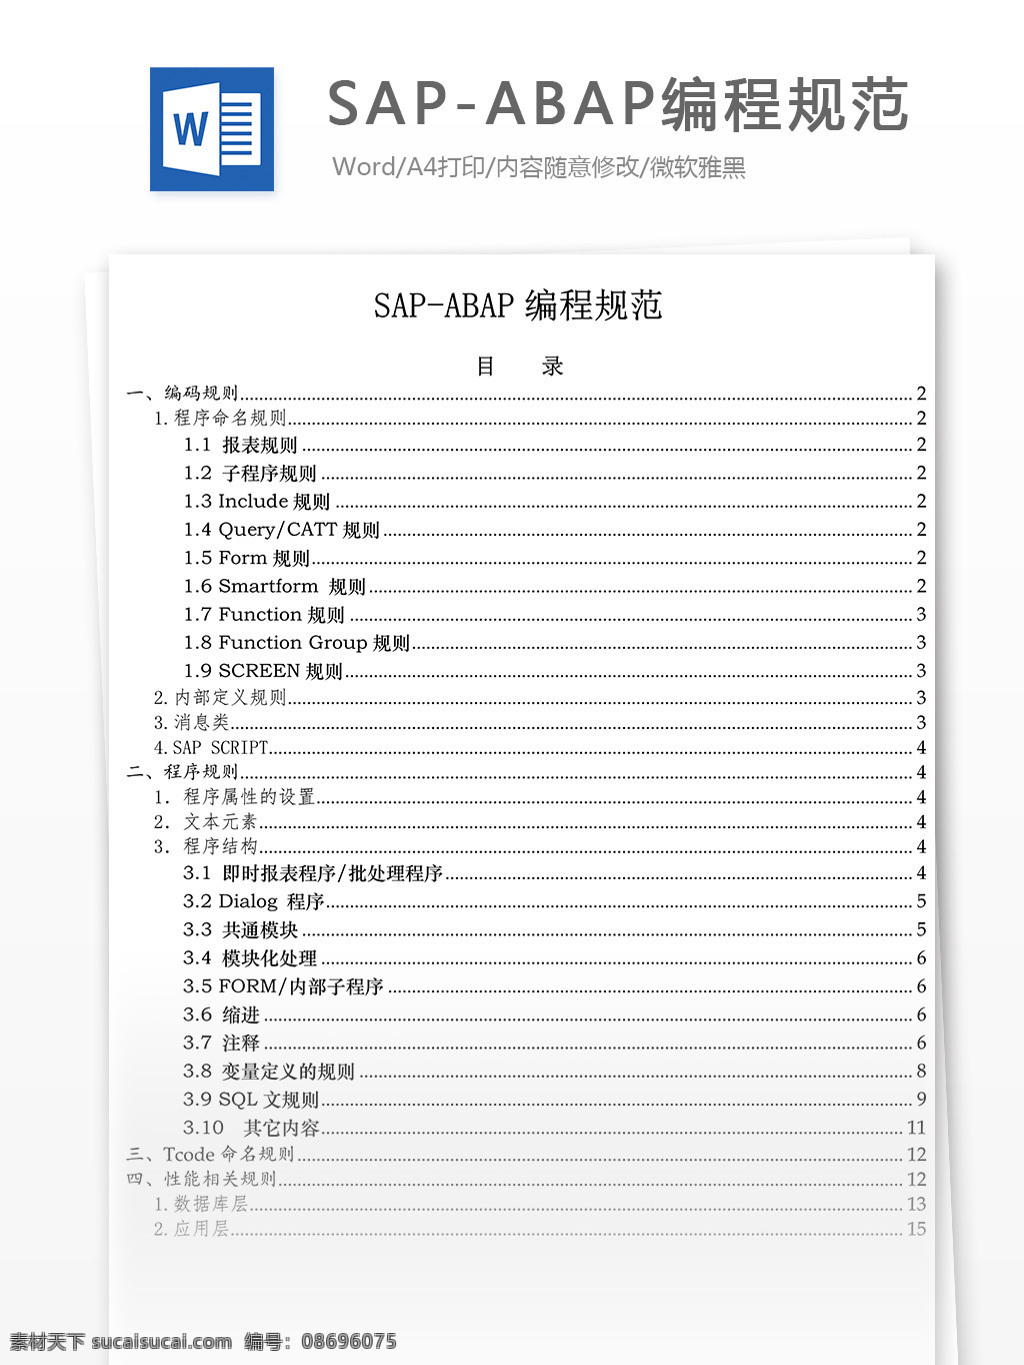 sapabap 编程 规范 高等教育 文档 编程规范 sap abap 教育文档